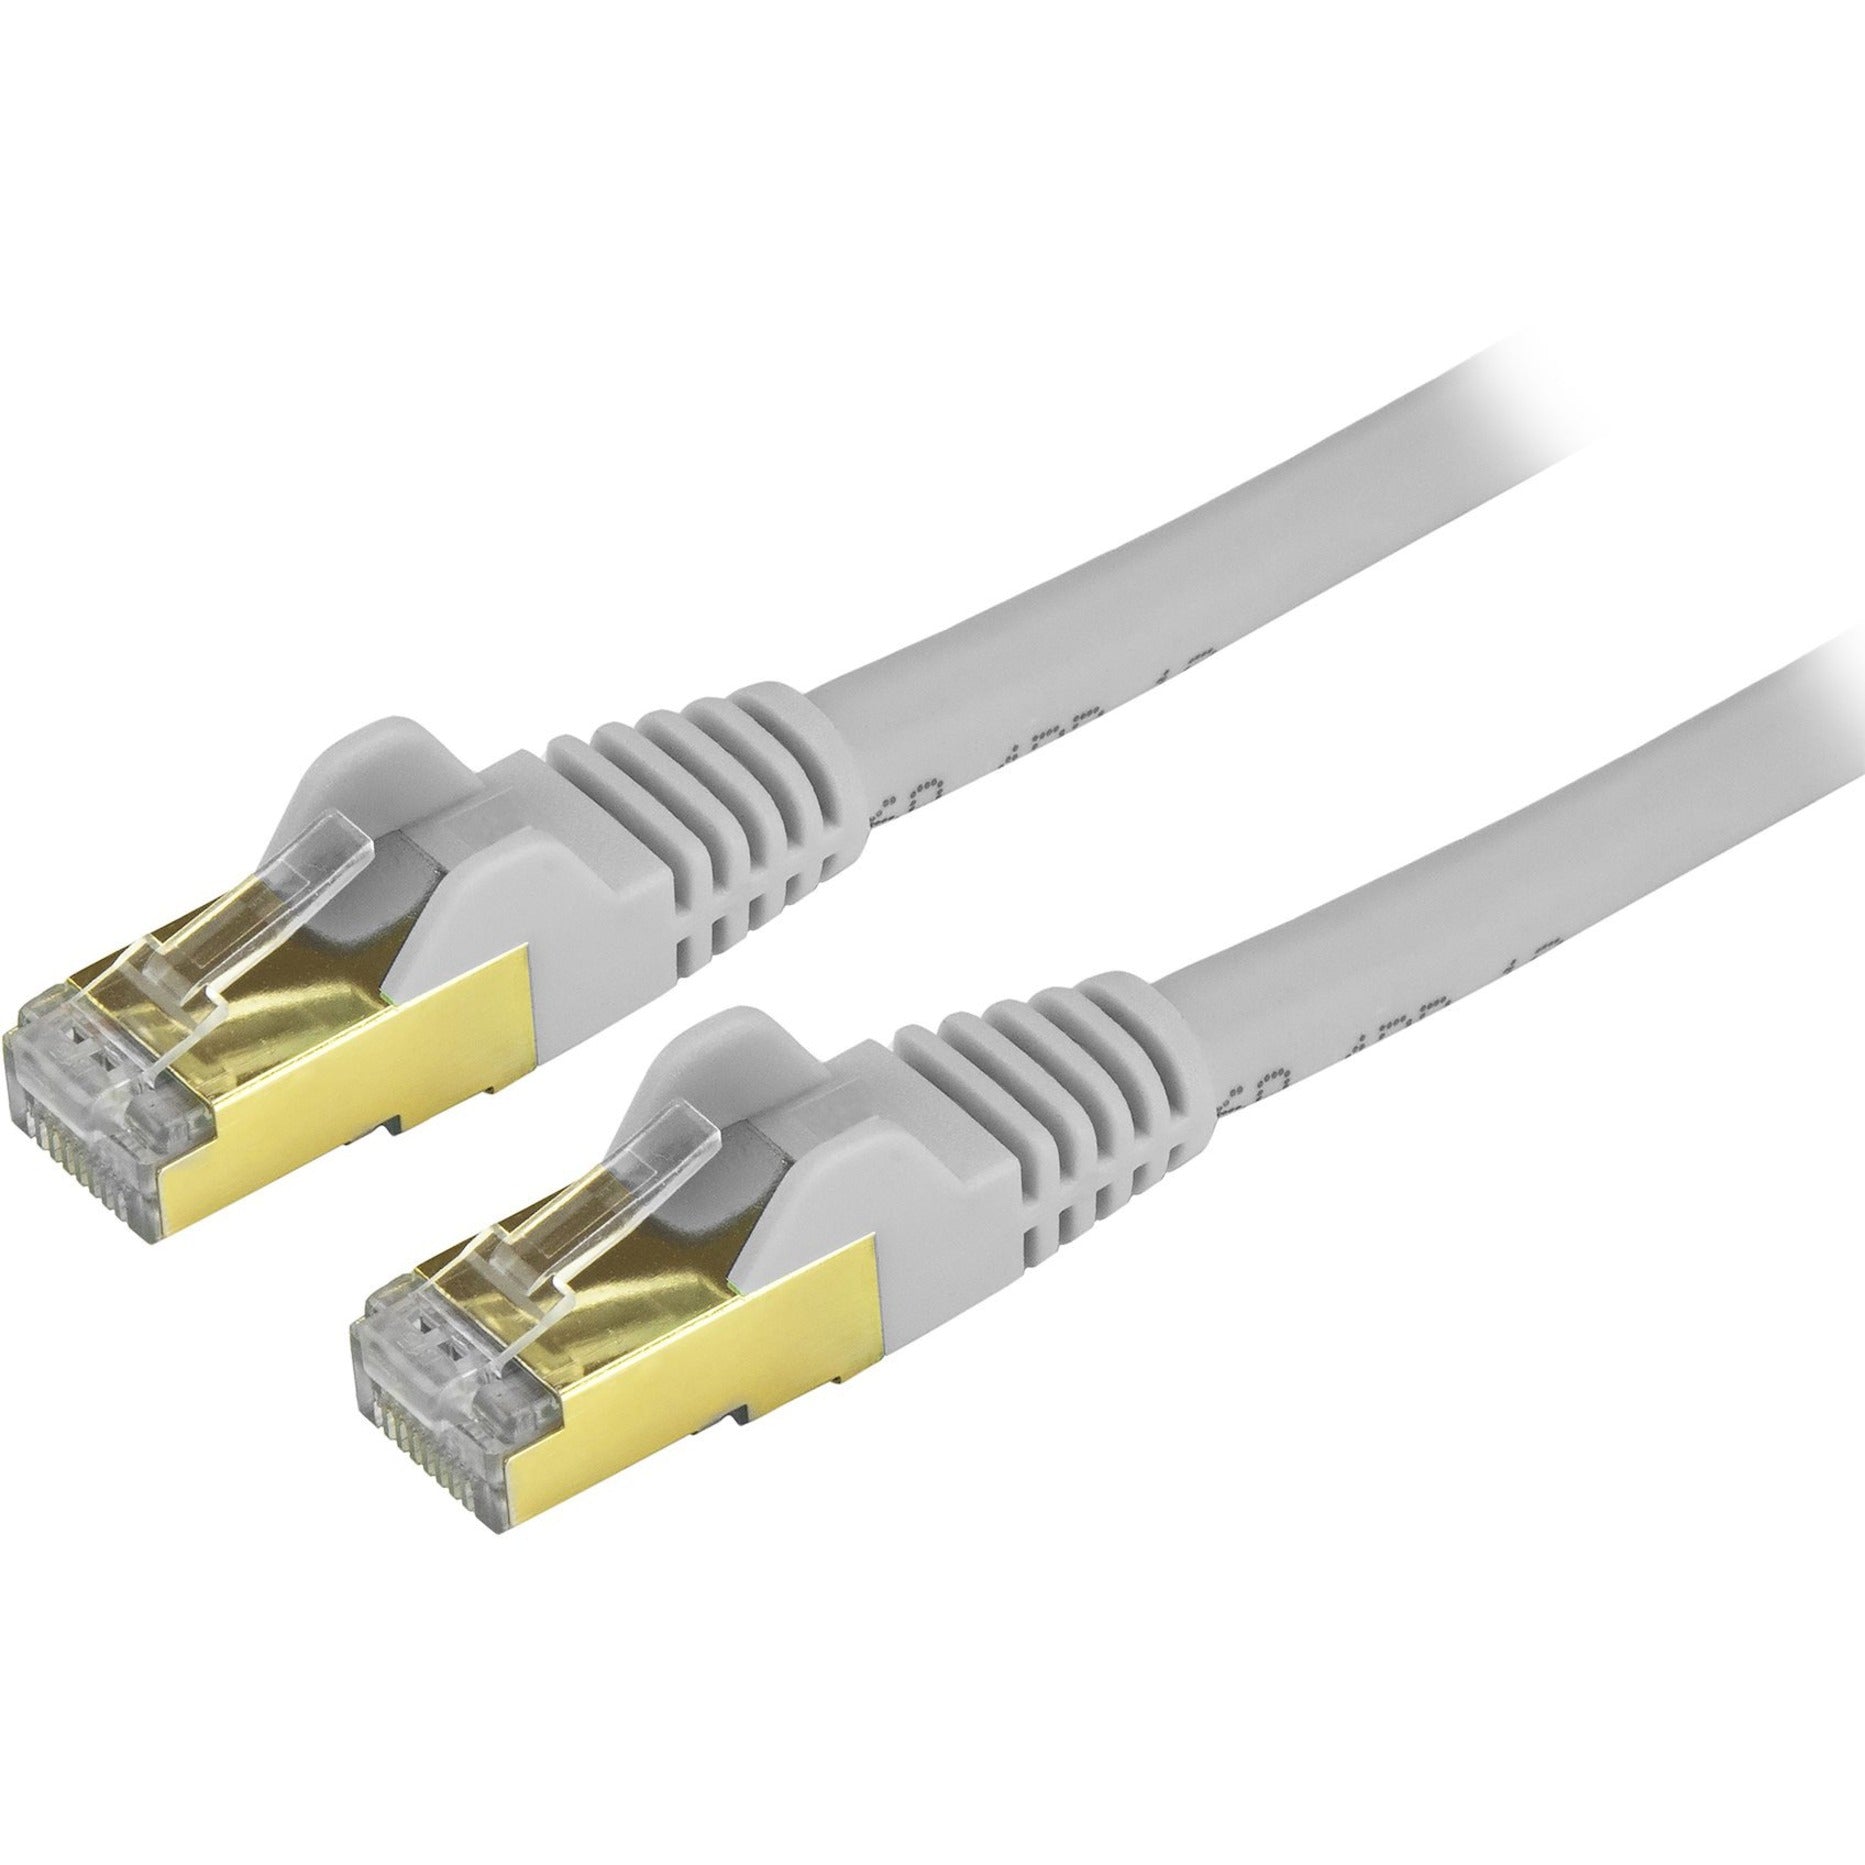 StarTech.com C6ASPAT4GR Cat6a Ethernet Patch Cable - Shielded (STP) - 4 ft., Gray, Snagless RJ45 Ethernet Cord